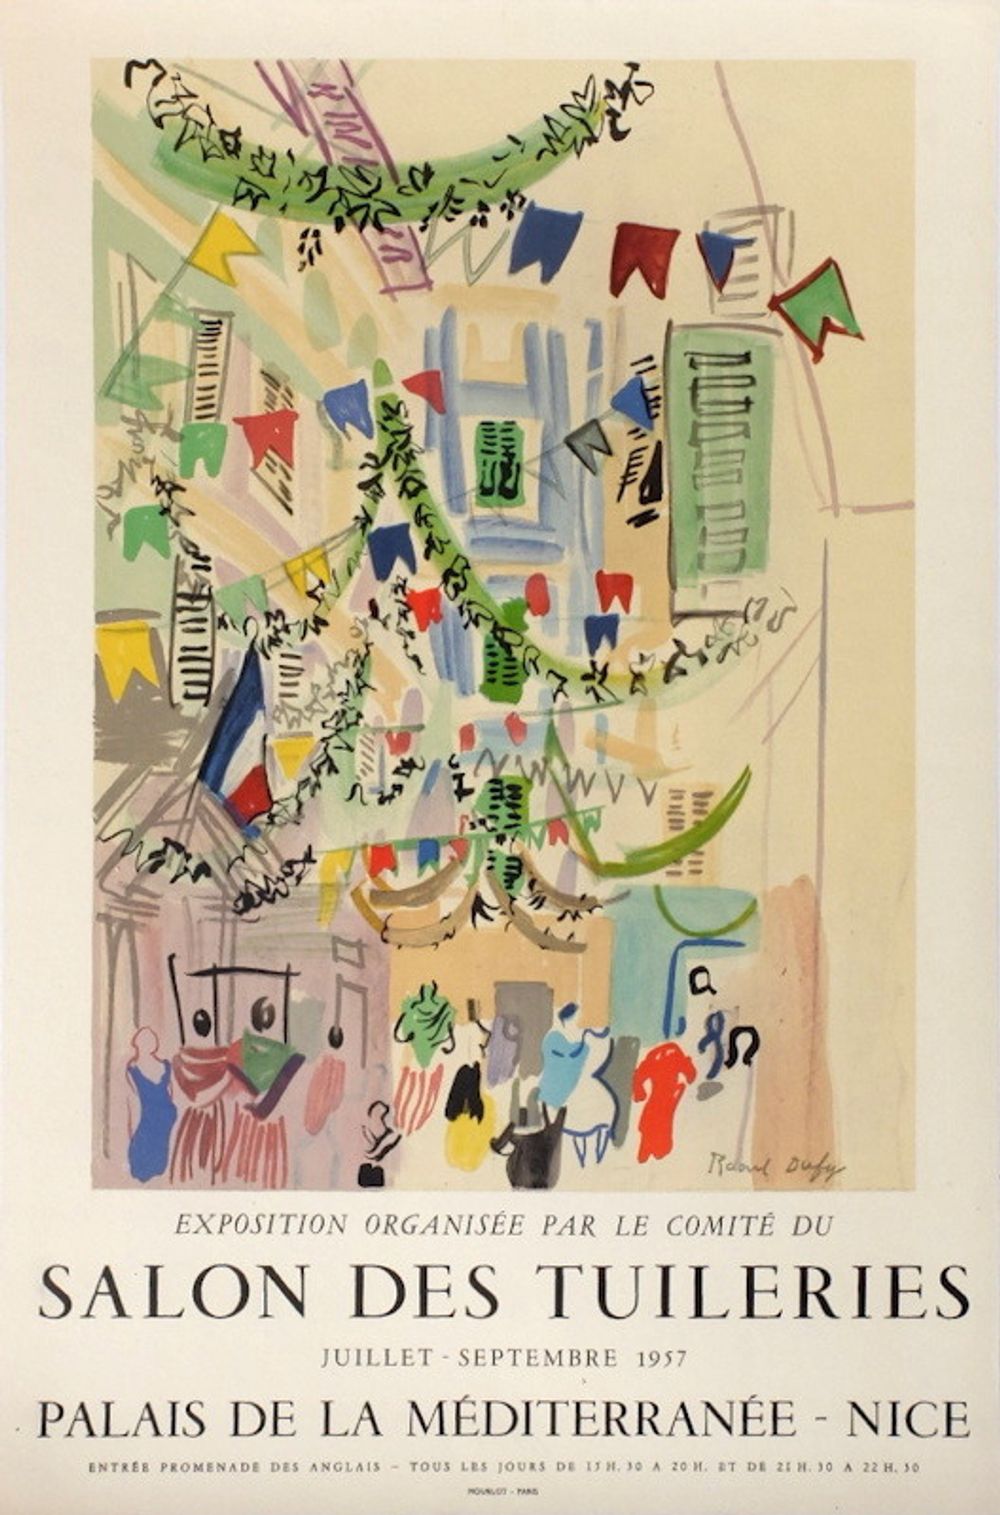 Expo 57 - Salon des Tuileries